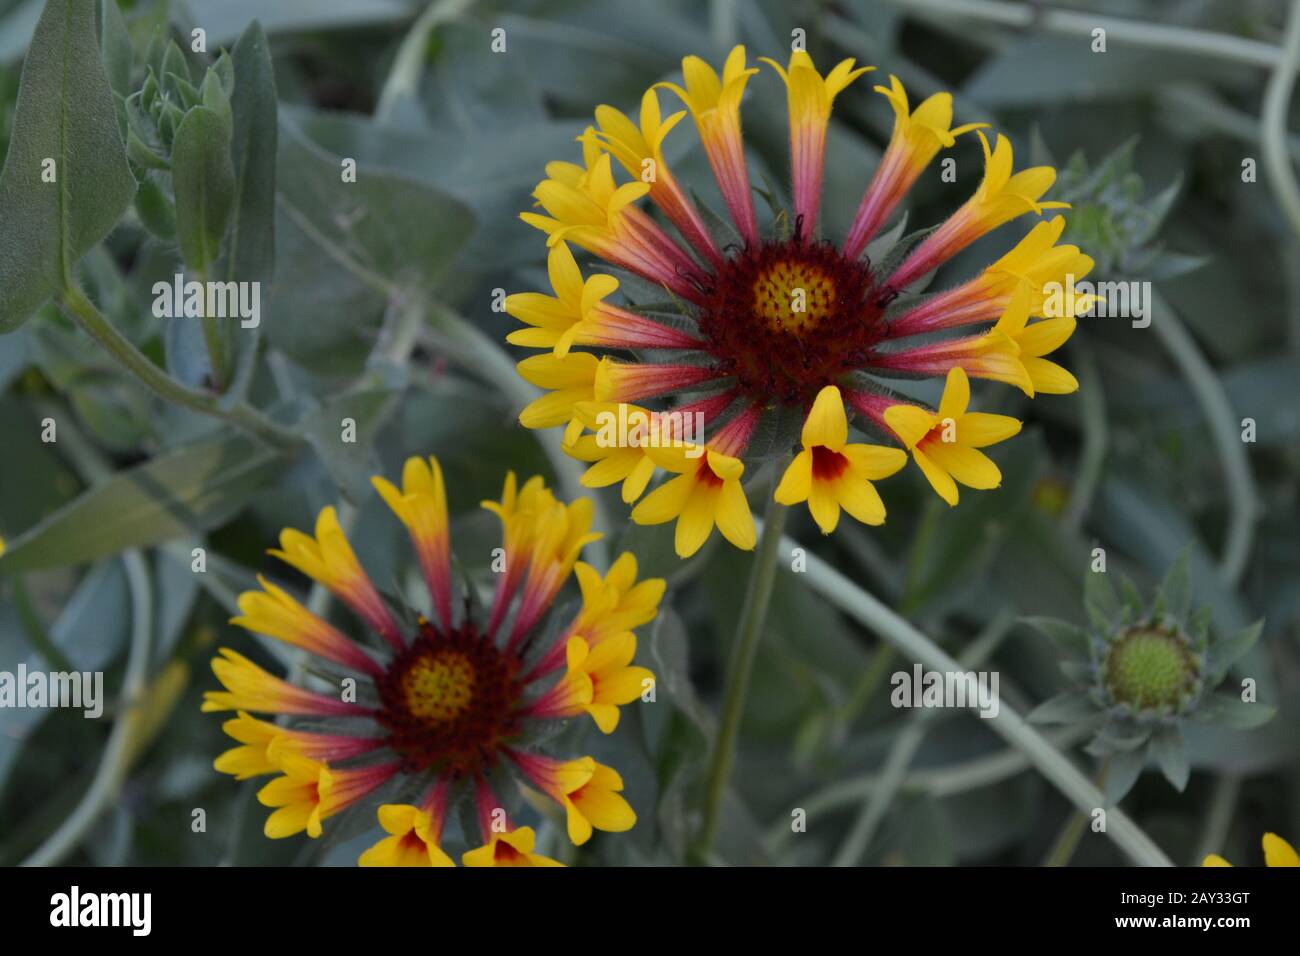 Gaillardia. G. hybrida Fanfare. Summer flower yellow. Annual plant. Summer. Blurring background Stock Photo